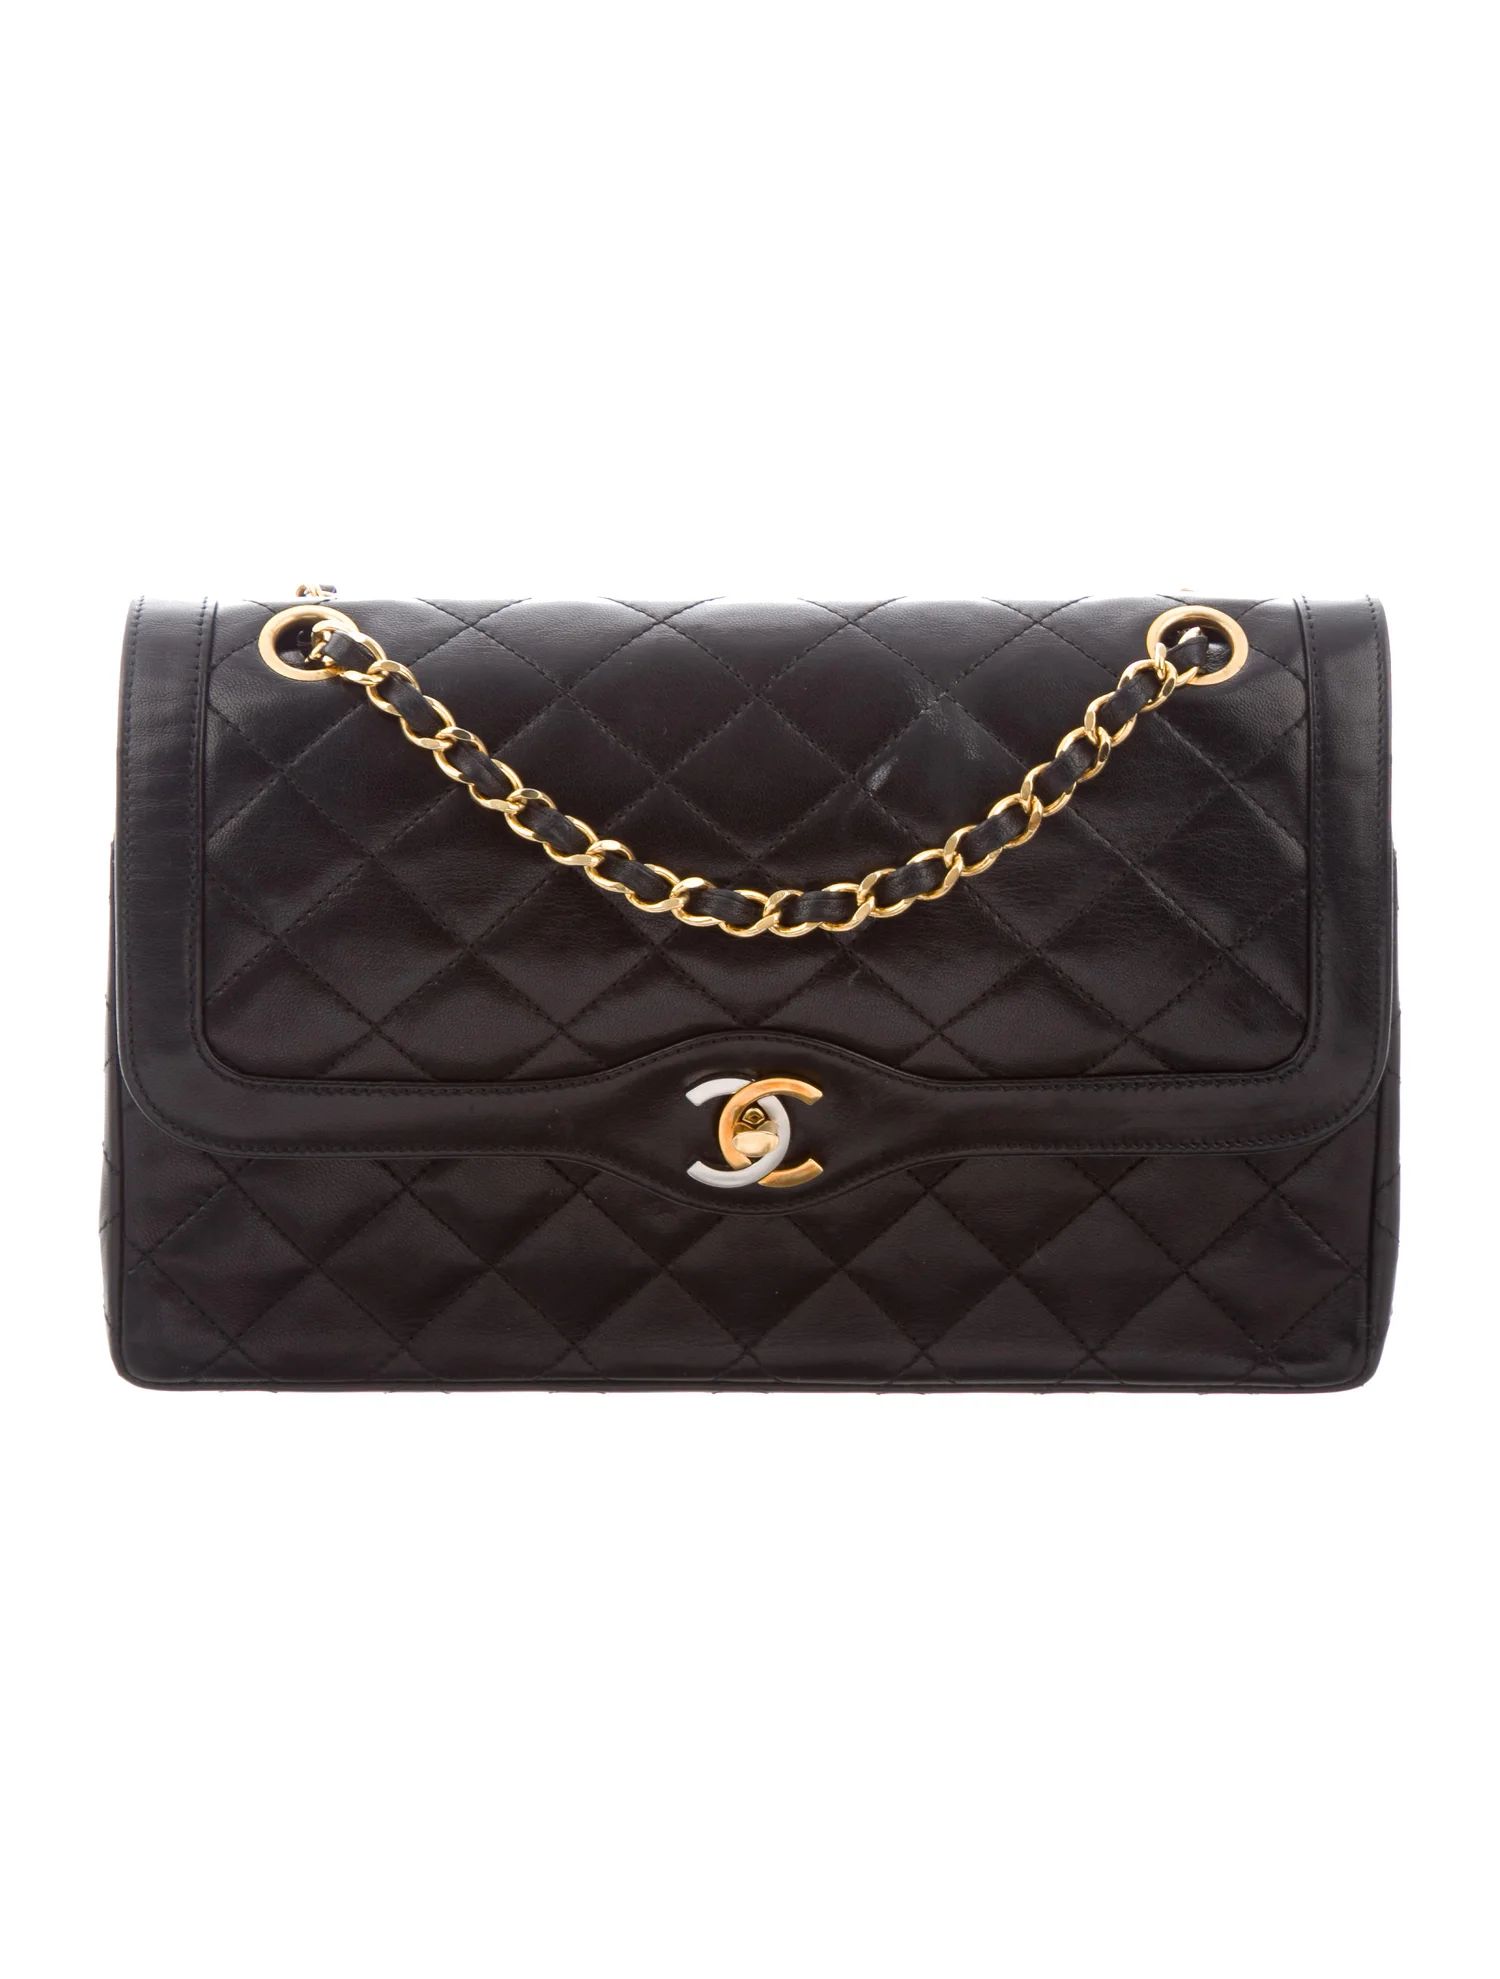 Chanel Vintage Medium Double Flap Bag - Handbags -
          CHA371404 | The RealReal | The RealReal